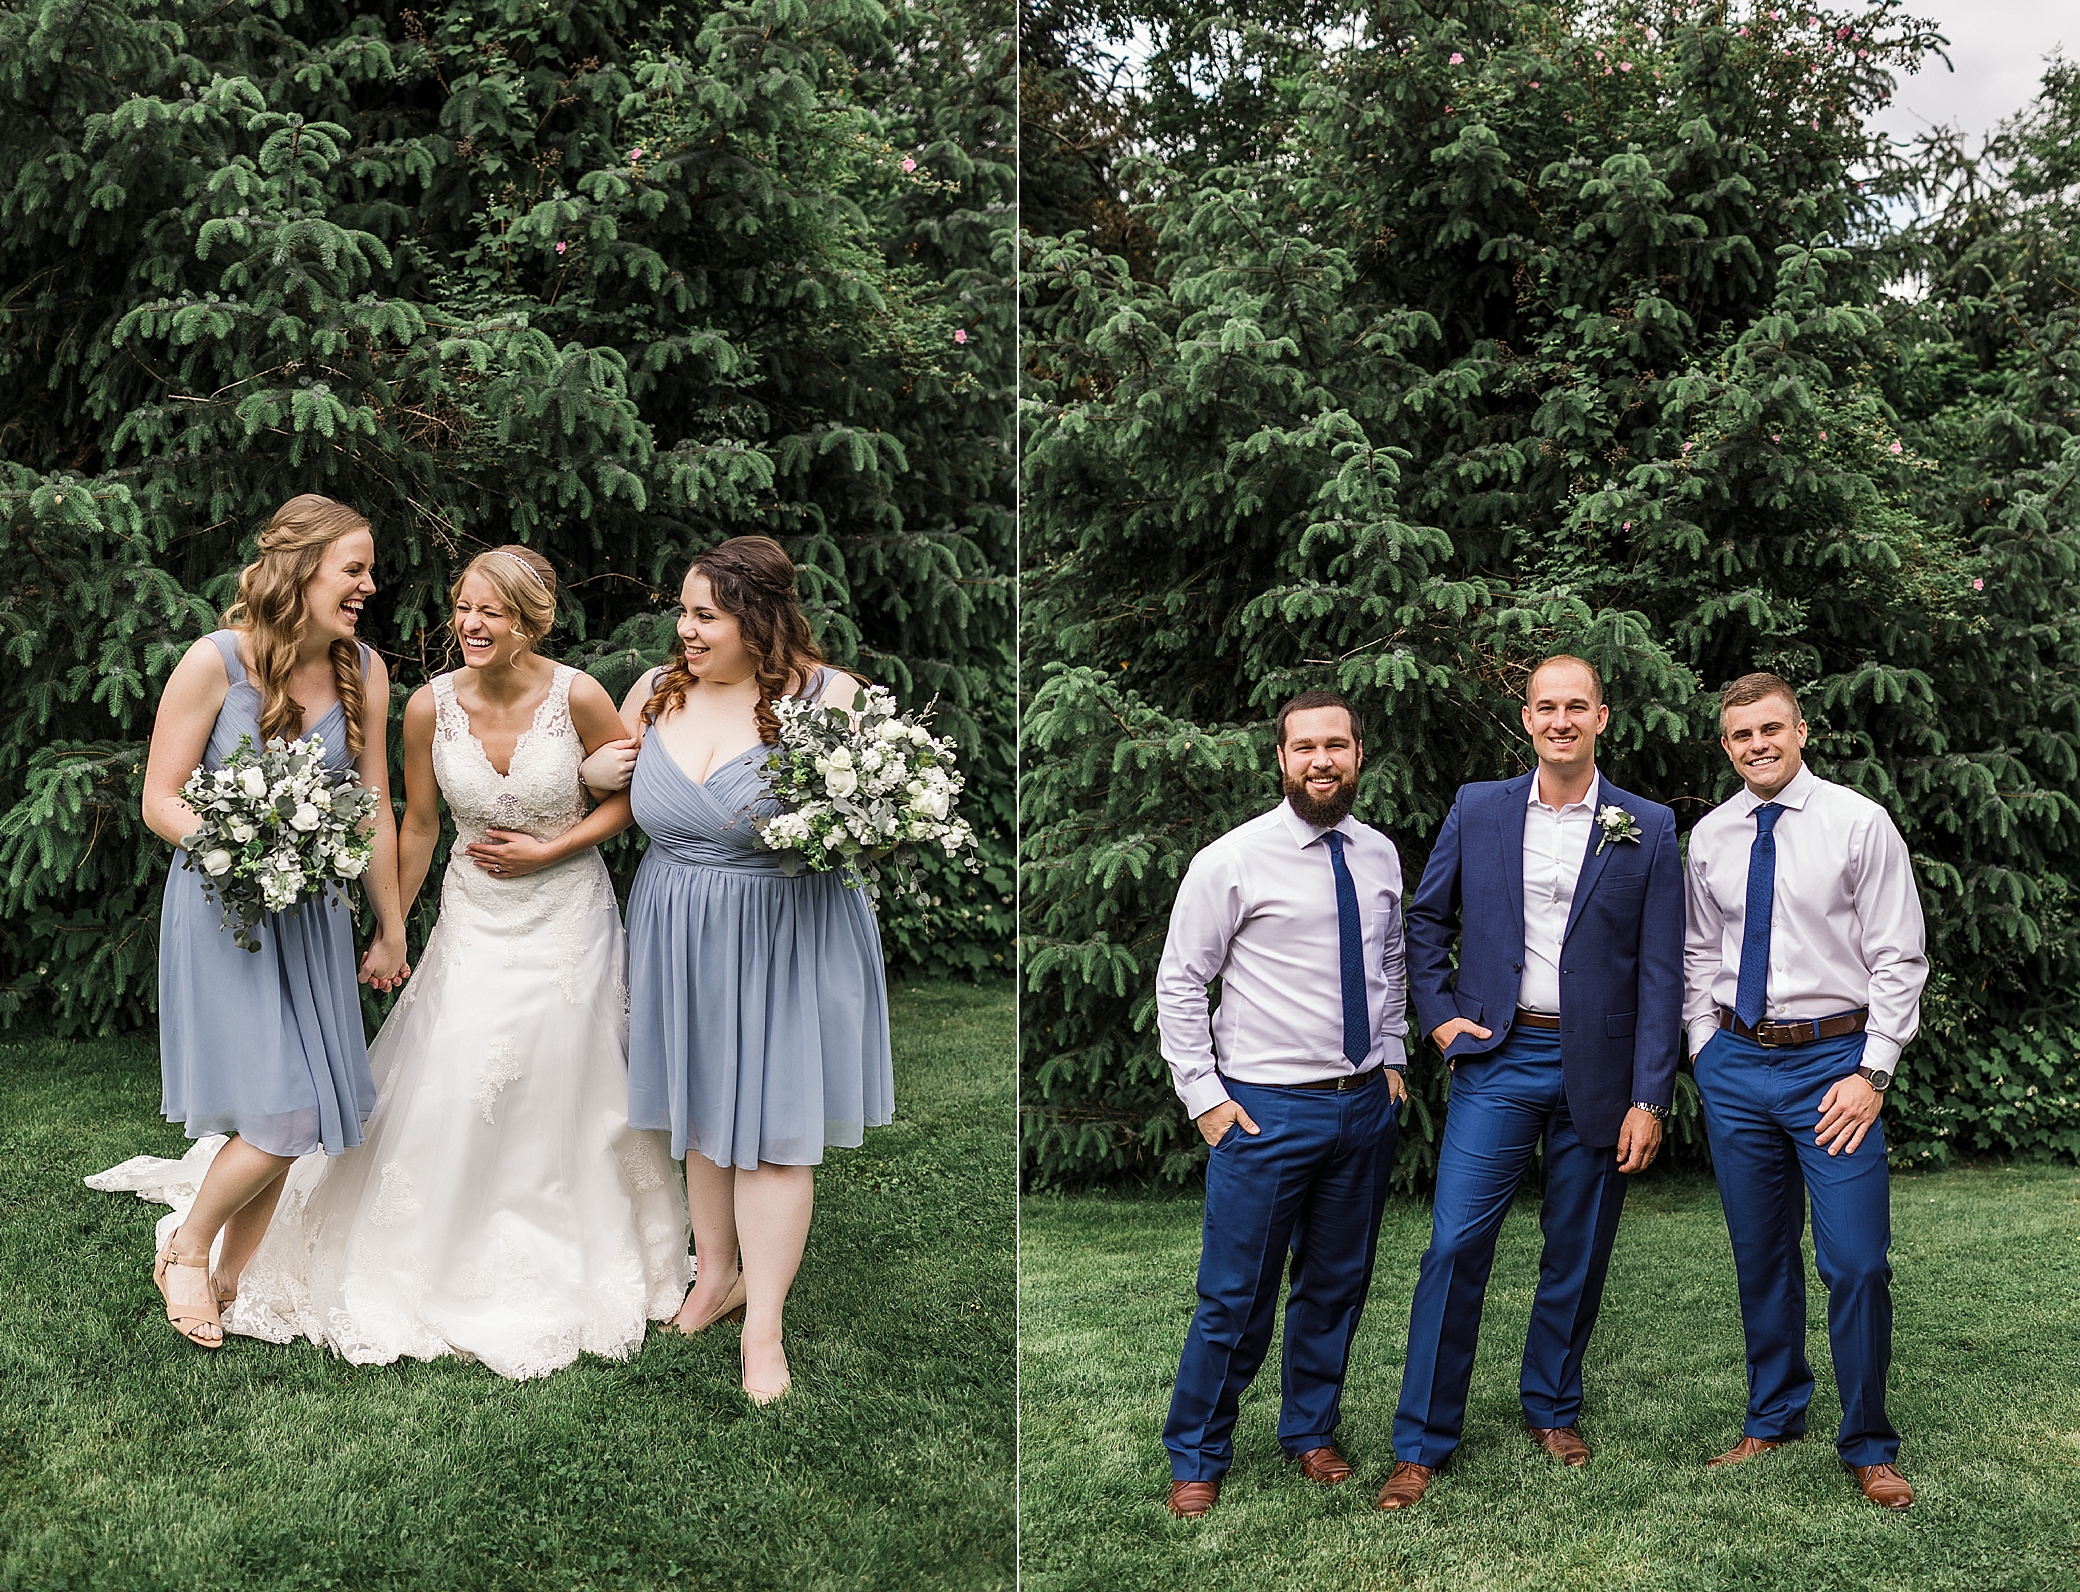 Bridesmaids and groomsmen | Megan Montalvo Photography 